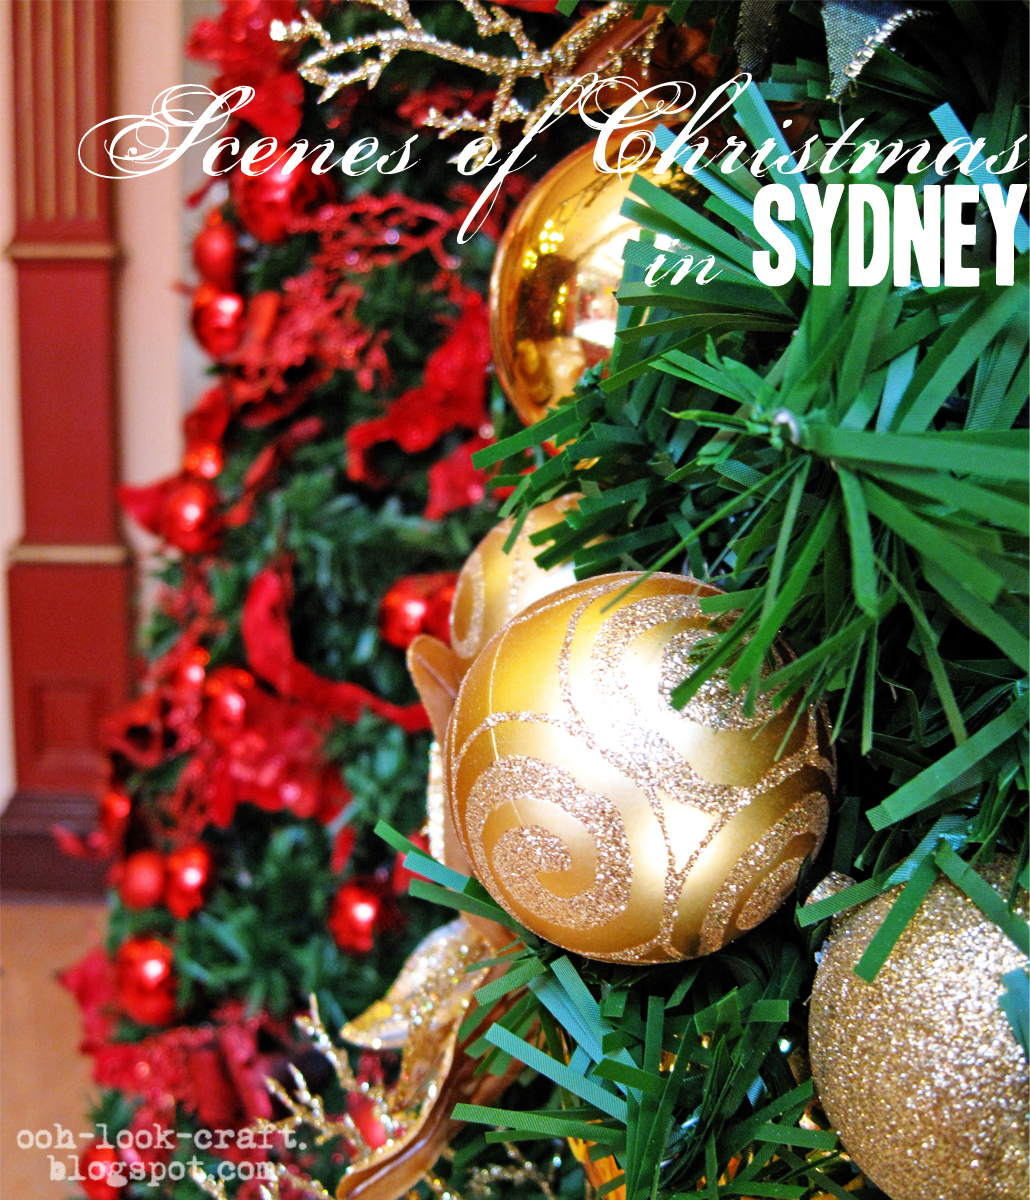 https://blogger.googleusercontent.com/img/b/R29vZ2xl/AVvXsEgbOem19GxmEYaFodrCB4tdndDKISj9XfeEKTmZp14oiaEP4gO9h76t7mDjPH4QPWfIRKu9uWImzxWguRnFC7Mc3CS5O5LNOz64qN8iW-XDxlttl8UG8tJaPNit4pb_VZXz2SWHJQgUEc_T/s1600/Sydney+Christmas-1.jpg